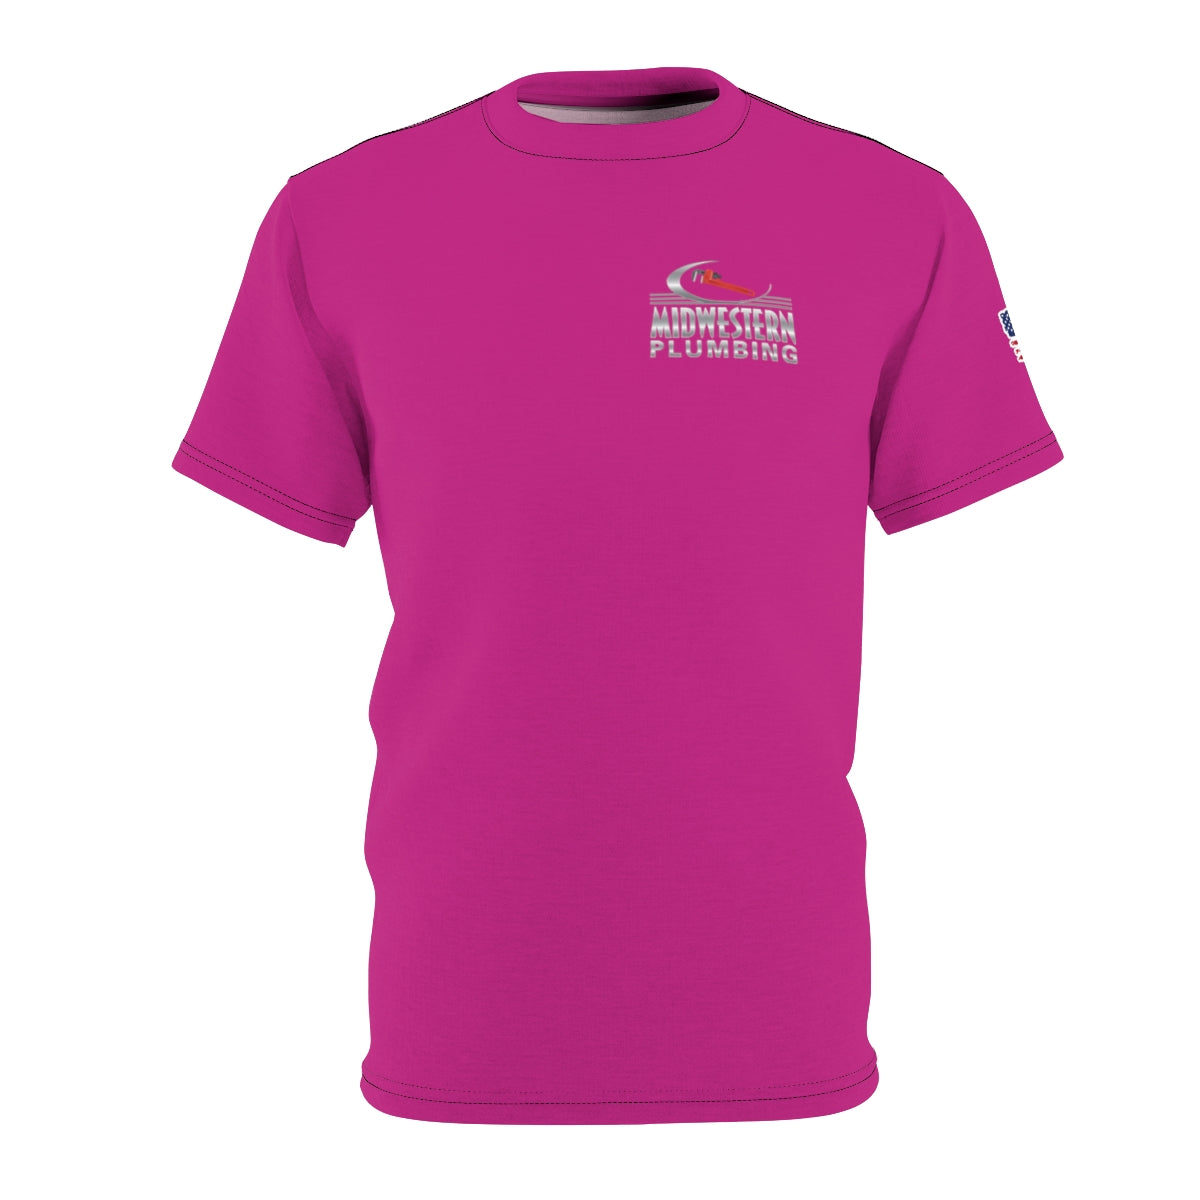 Camisa de trabajo premium rosa de Midwestern Plumbing